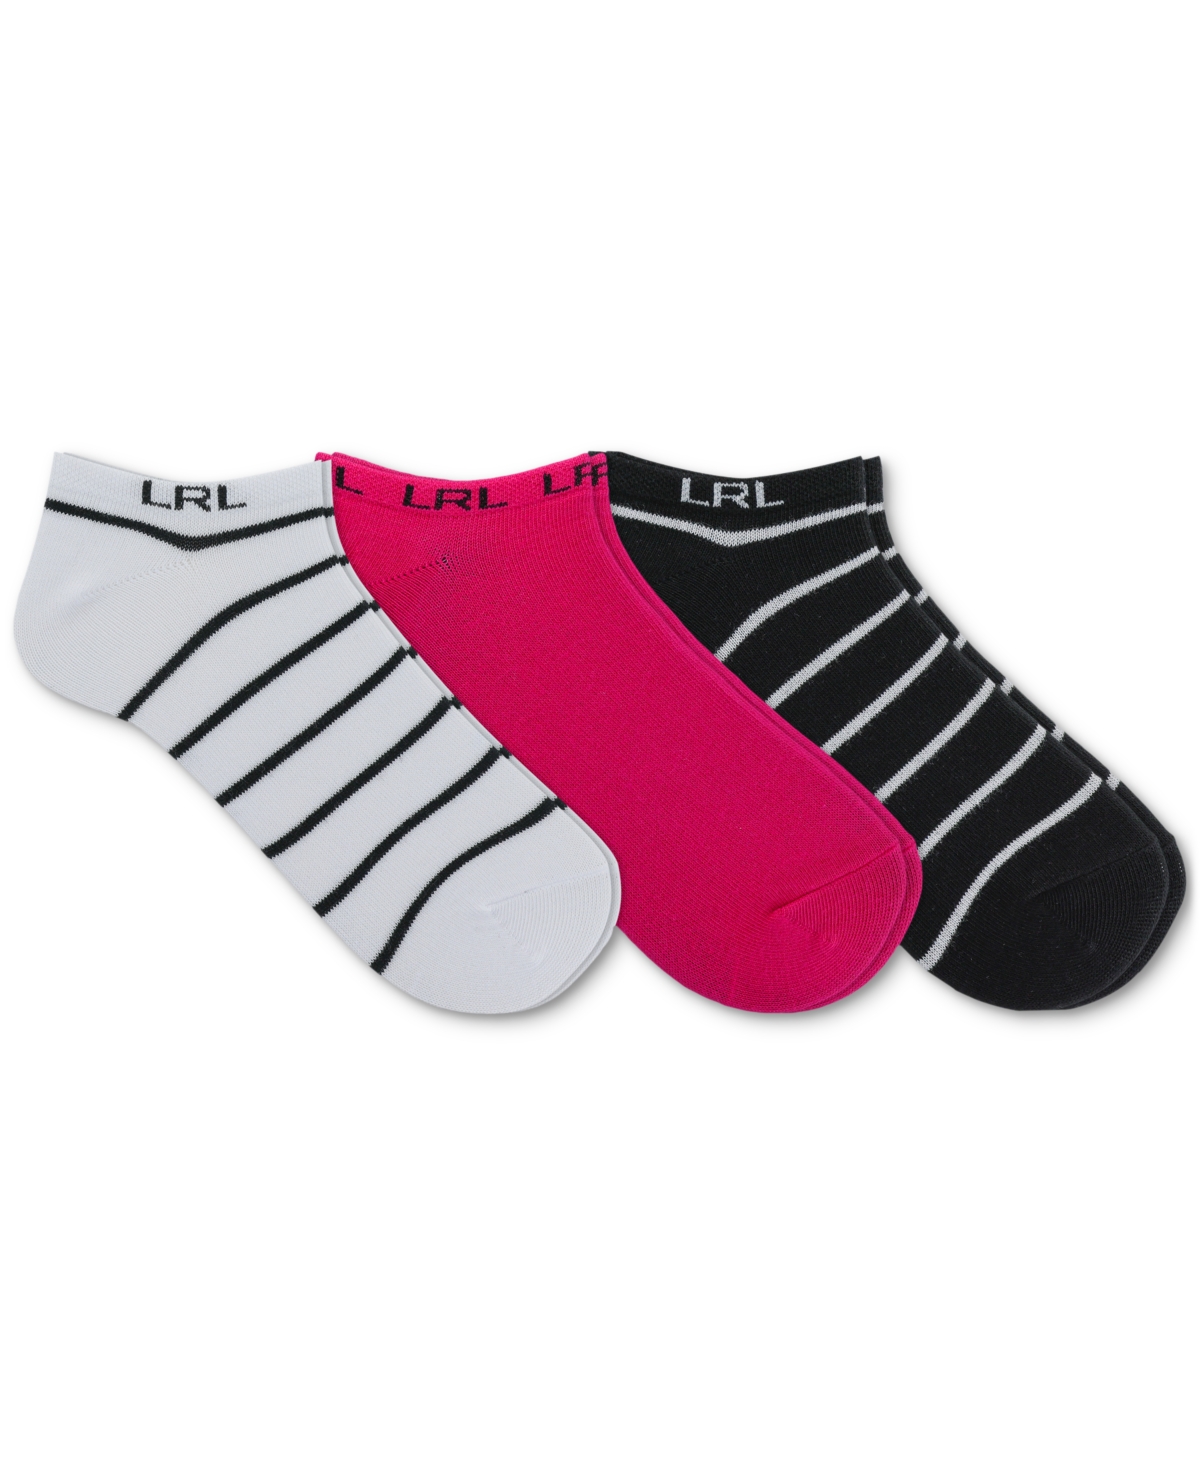 Lauren Ralph Lauren Women's 3-pk. Patterned Ankle Socks In Assorted